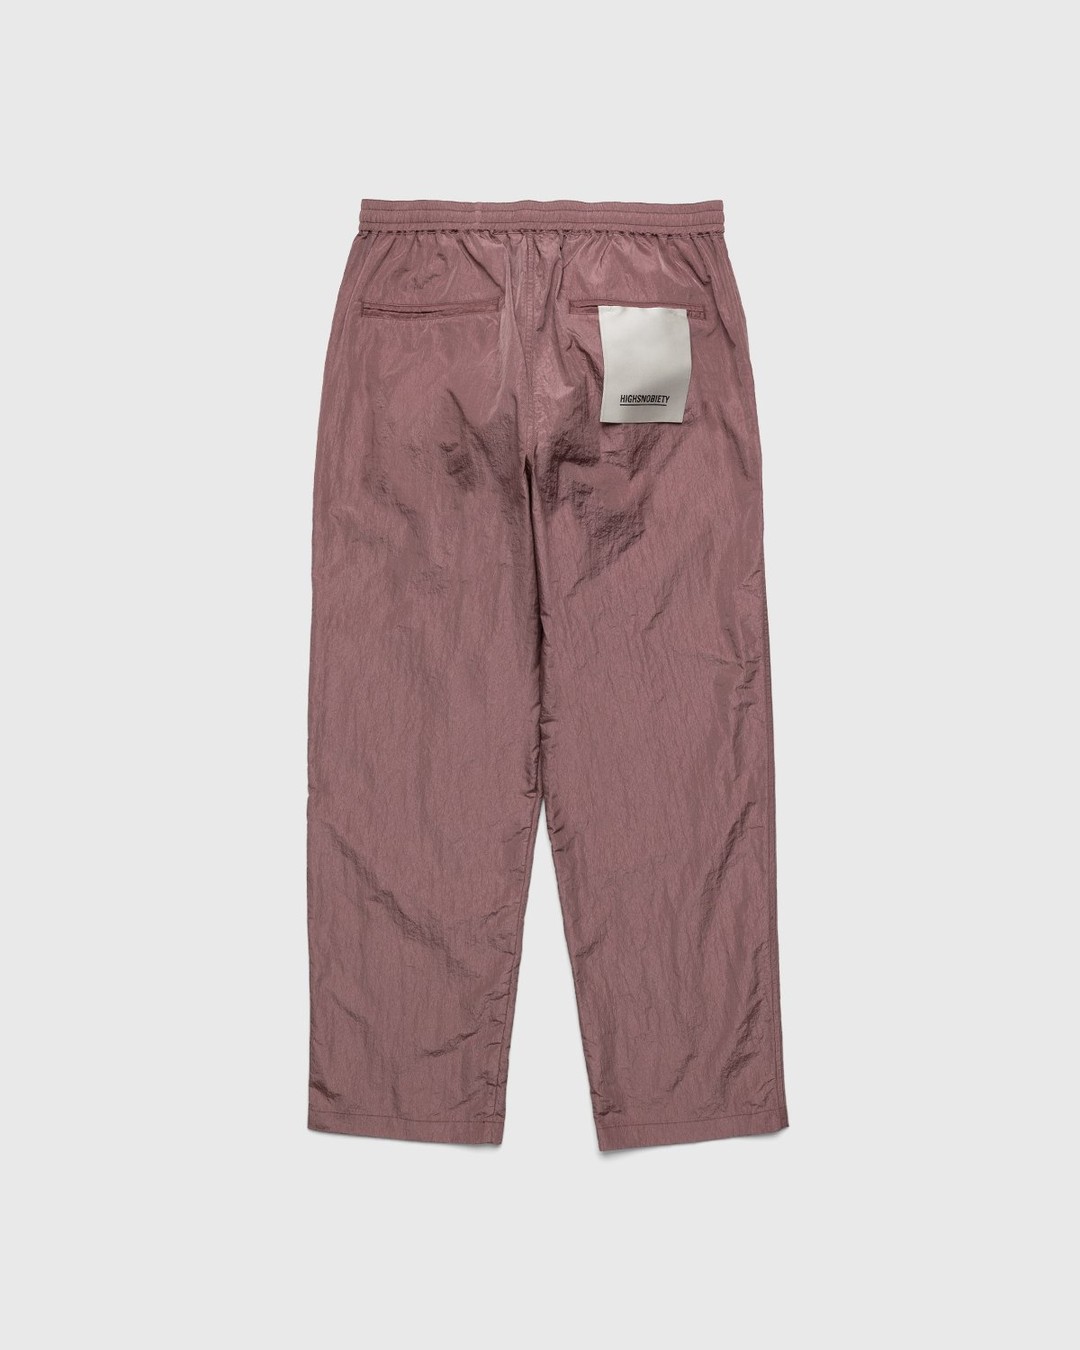 Highsnobiety – Crepe Nylon Elastic Pants Rose Gold - Active Pants - Pink - Image 2